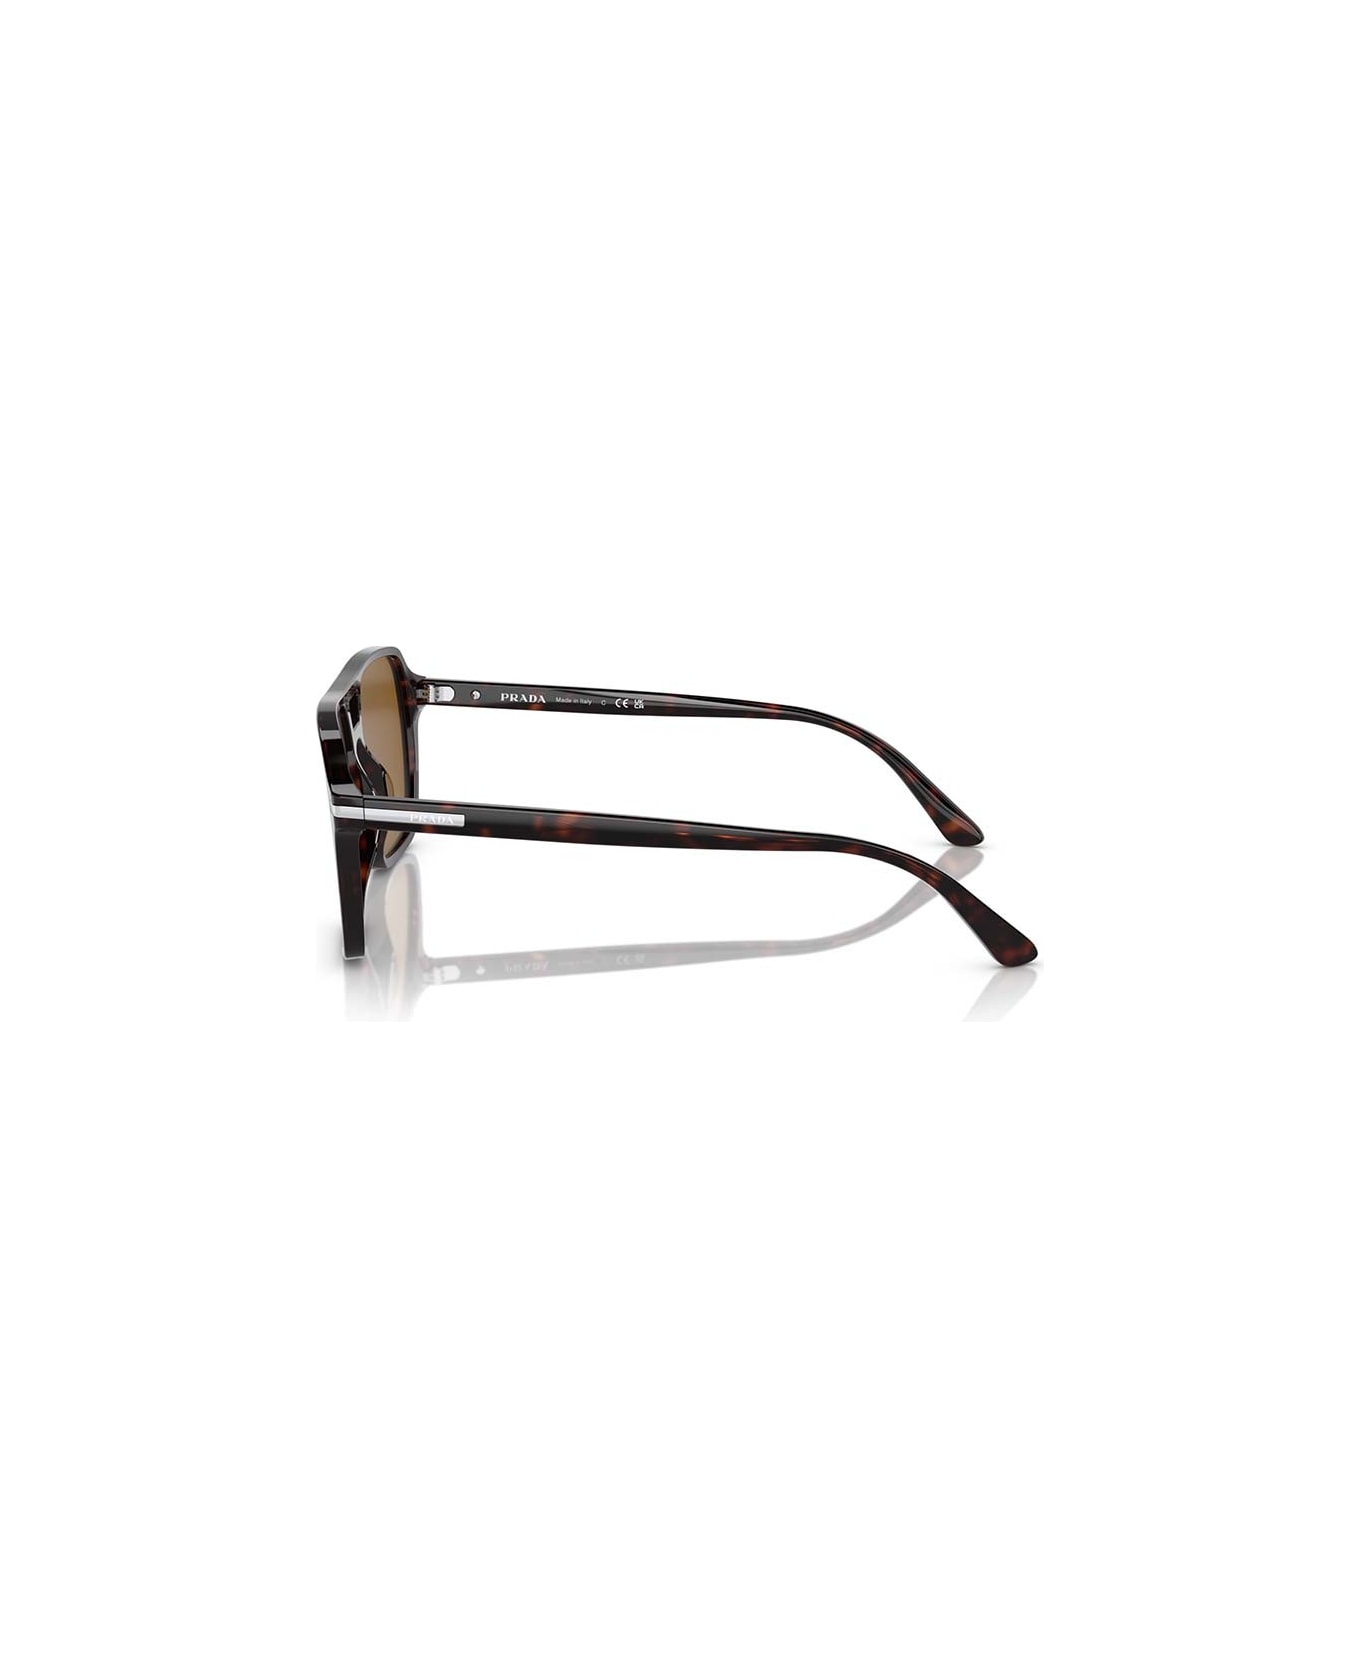 Prada Eyewear Sunglasses - Marrone/Marrone